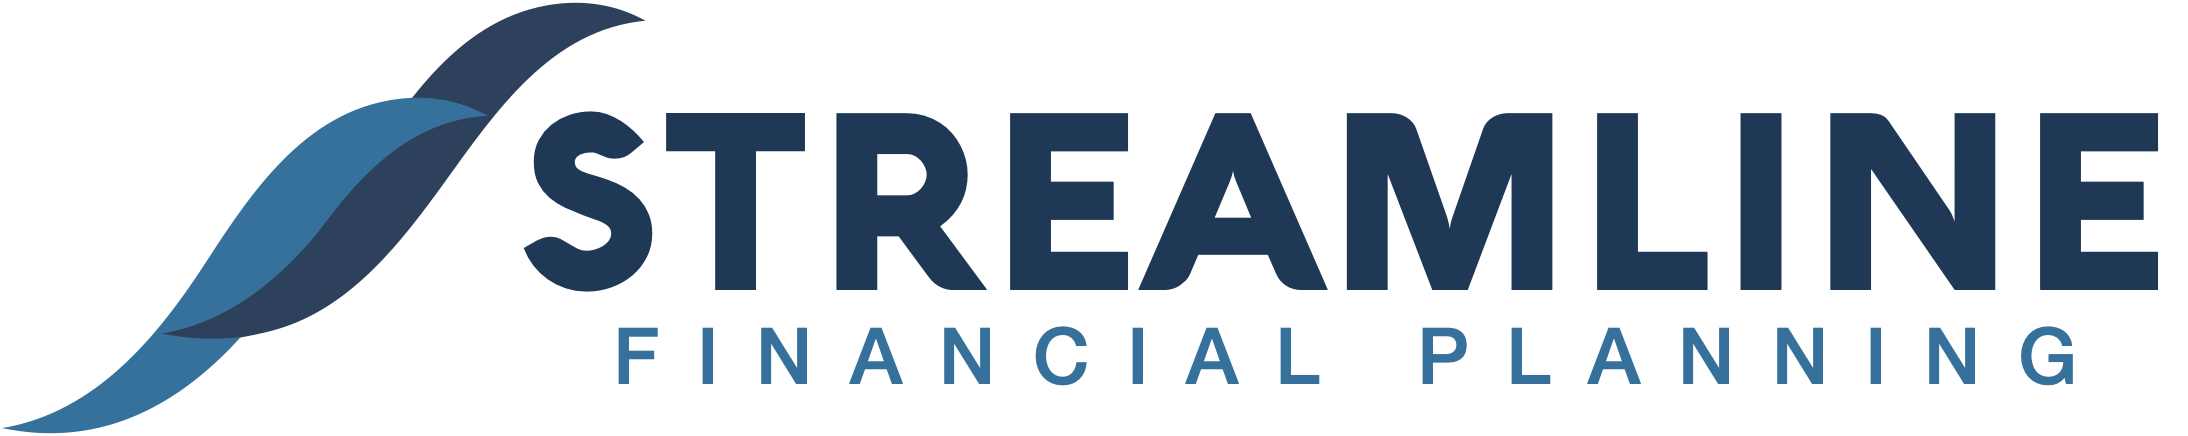 Streamline Financial Planning logo